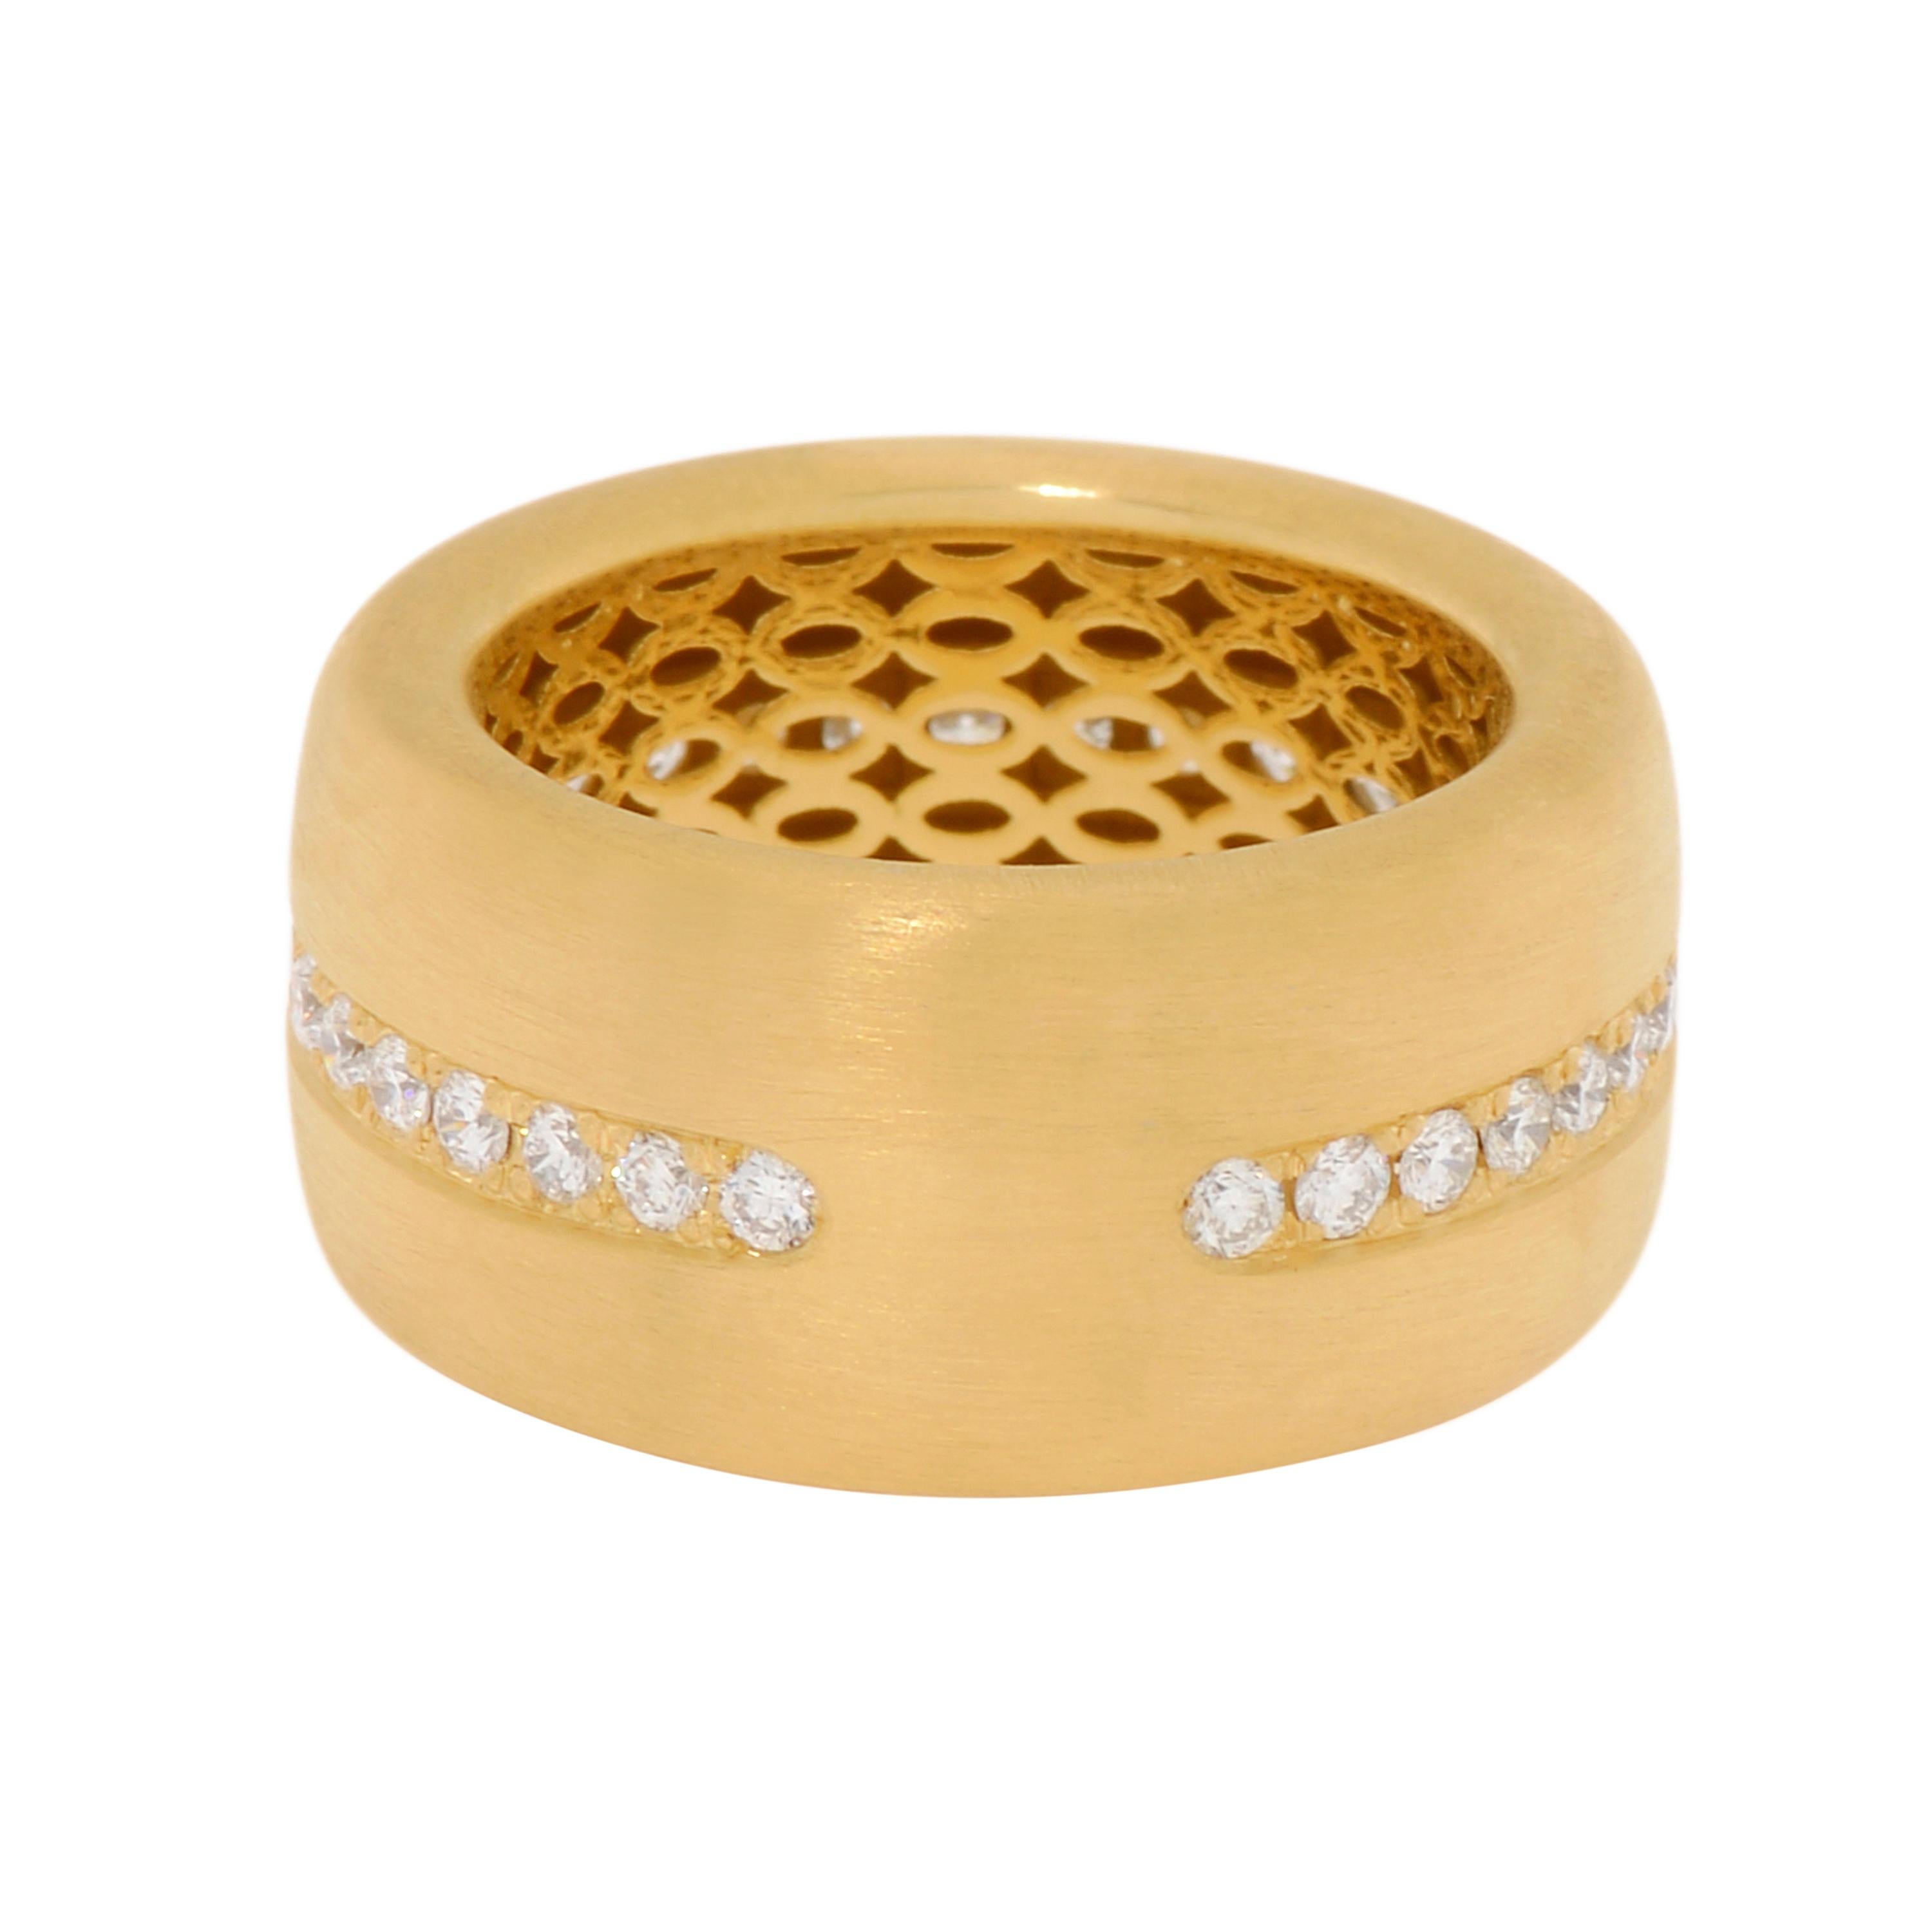 Contemporary Piero Milano 18K Yellow Gold Diamond Ring Sz 7.25 For Sale